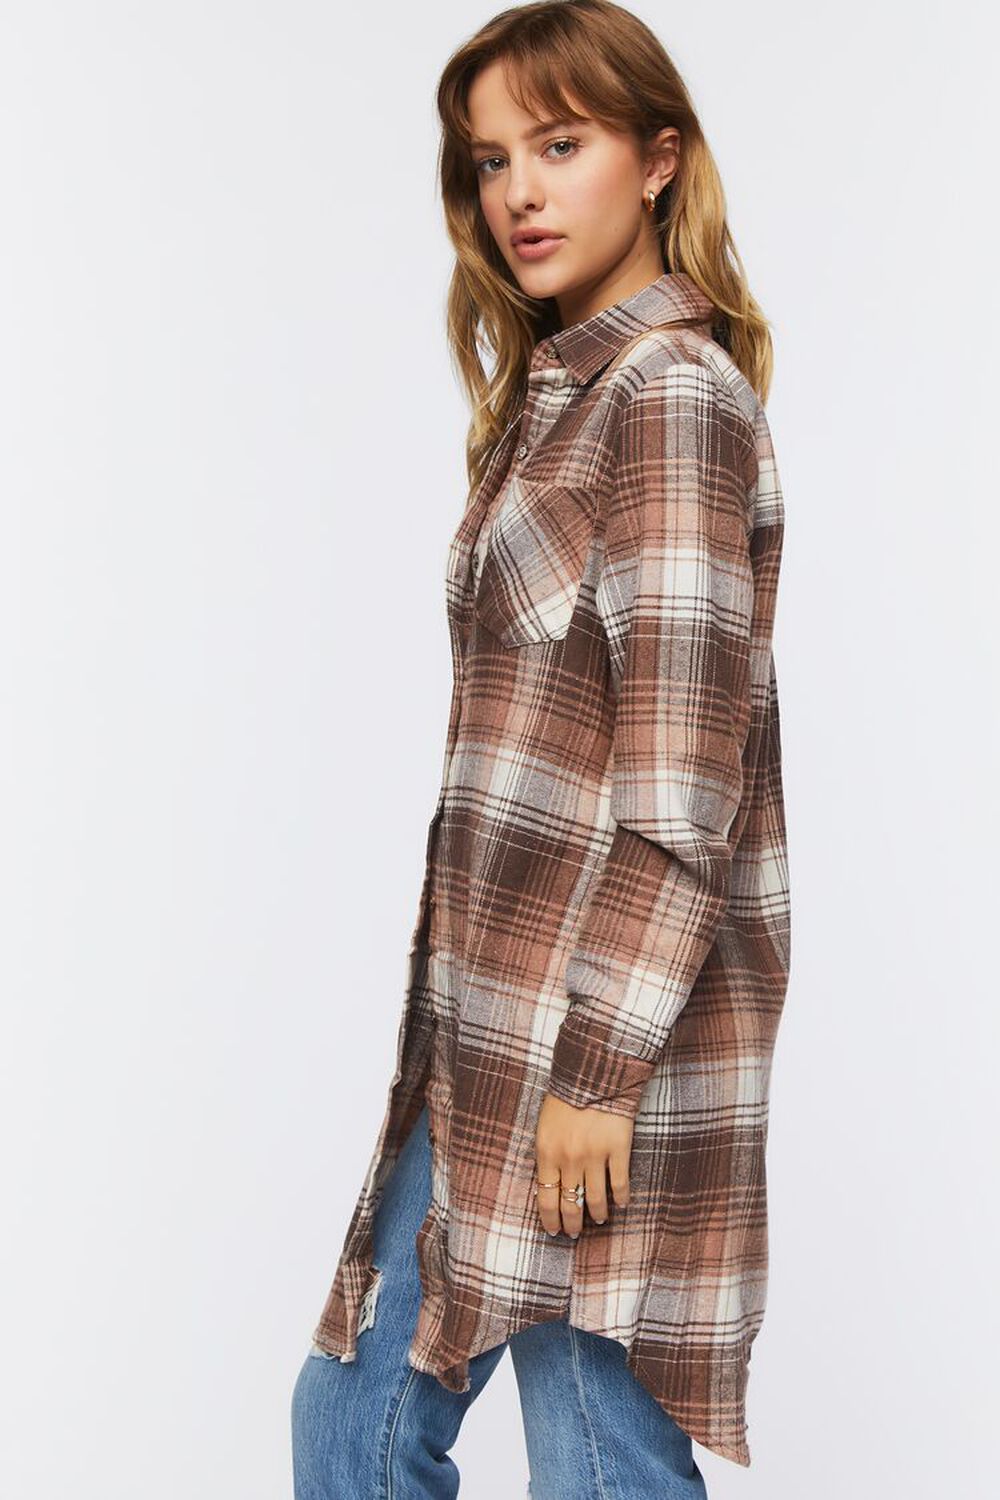 TAUPE/MULTI Longline Flannel Shirt, image 2